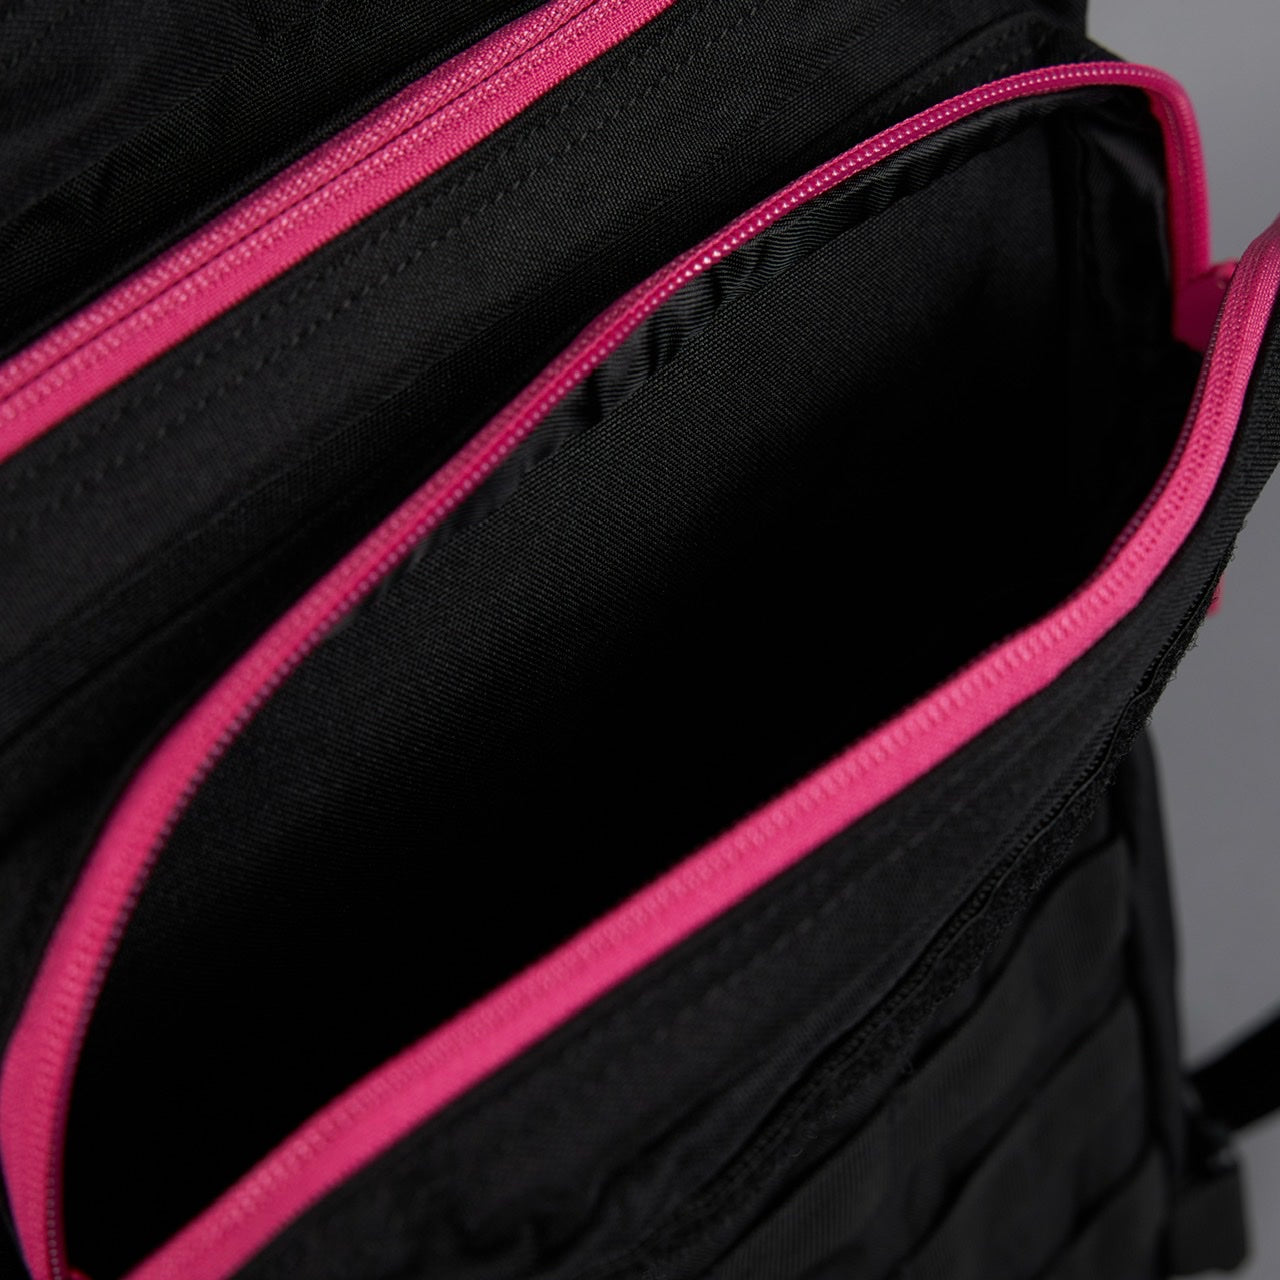 35L Backpack Fierce Pink